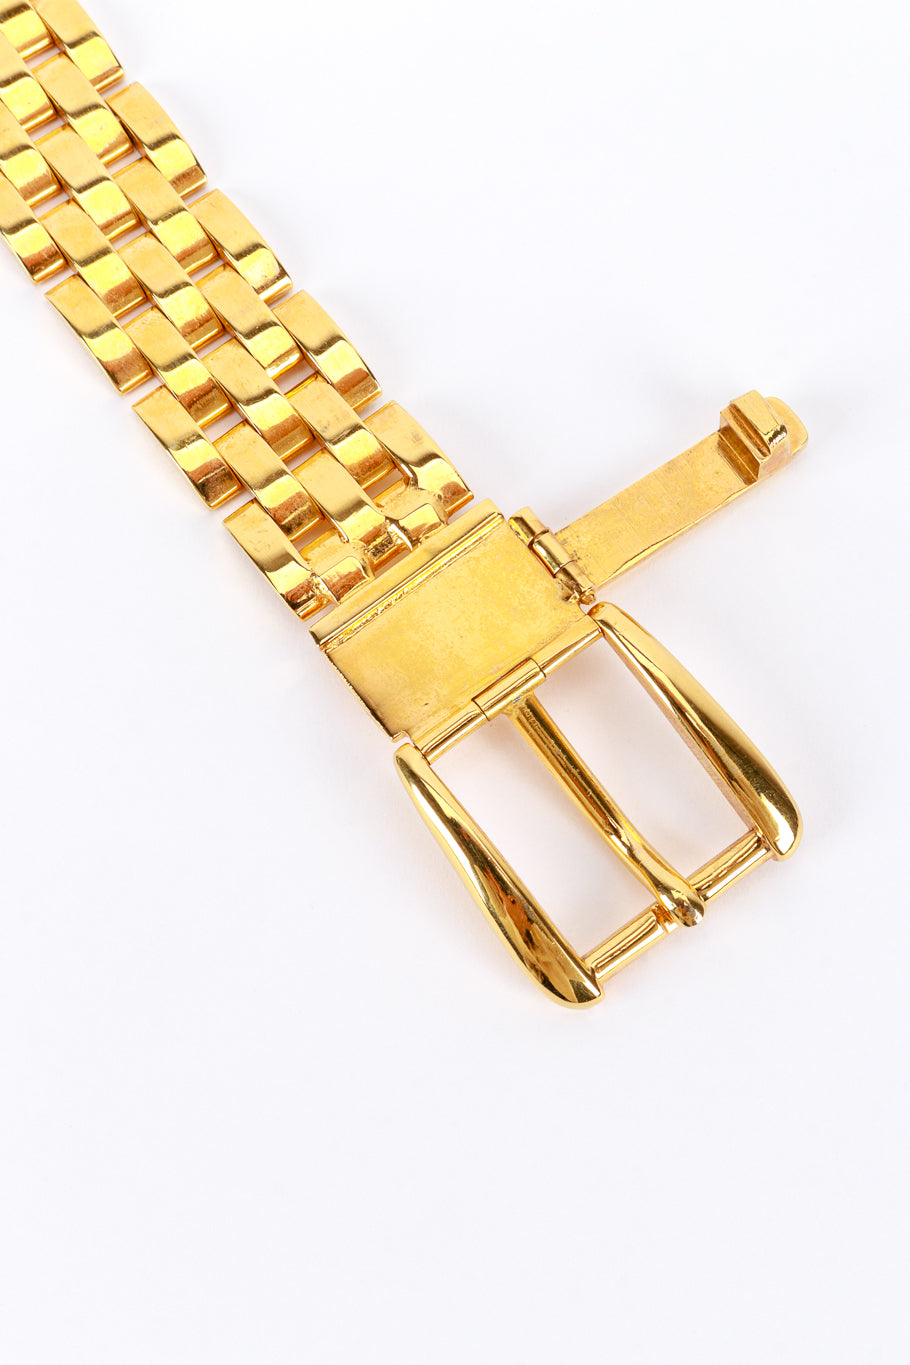 Vintage Gucci Panther Chain Metal Belt buckle clasp open @recess la